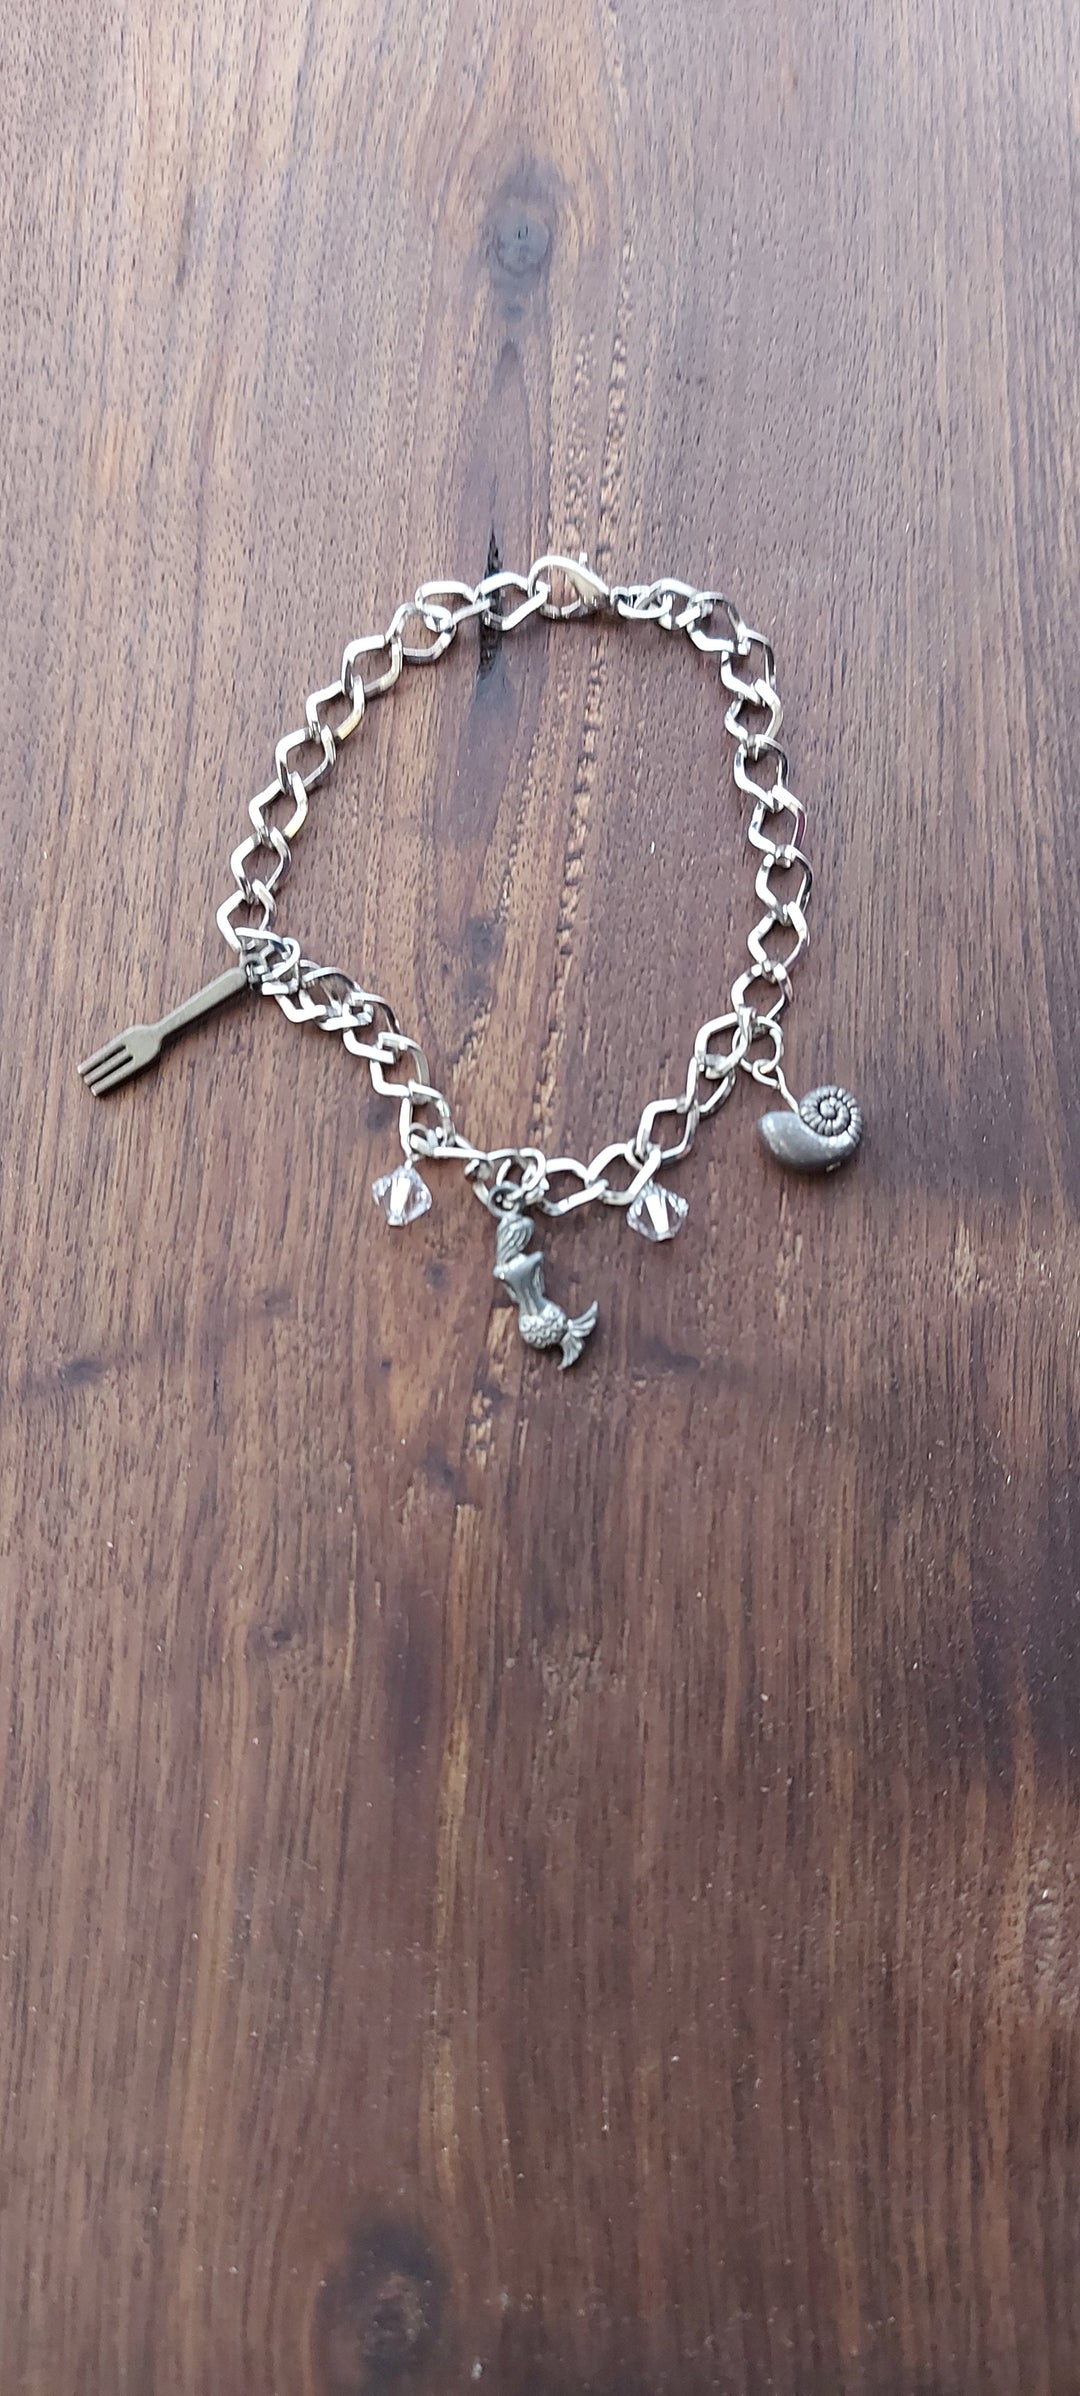 Quirk Handmade Jewelry, Bracelets